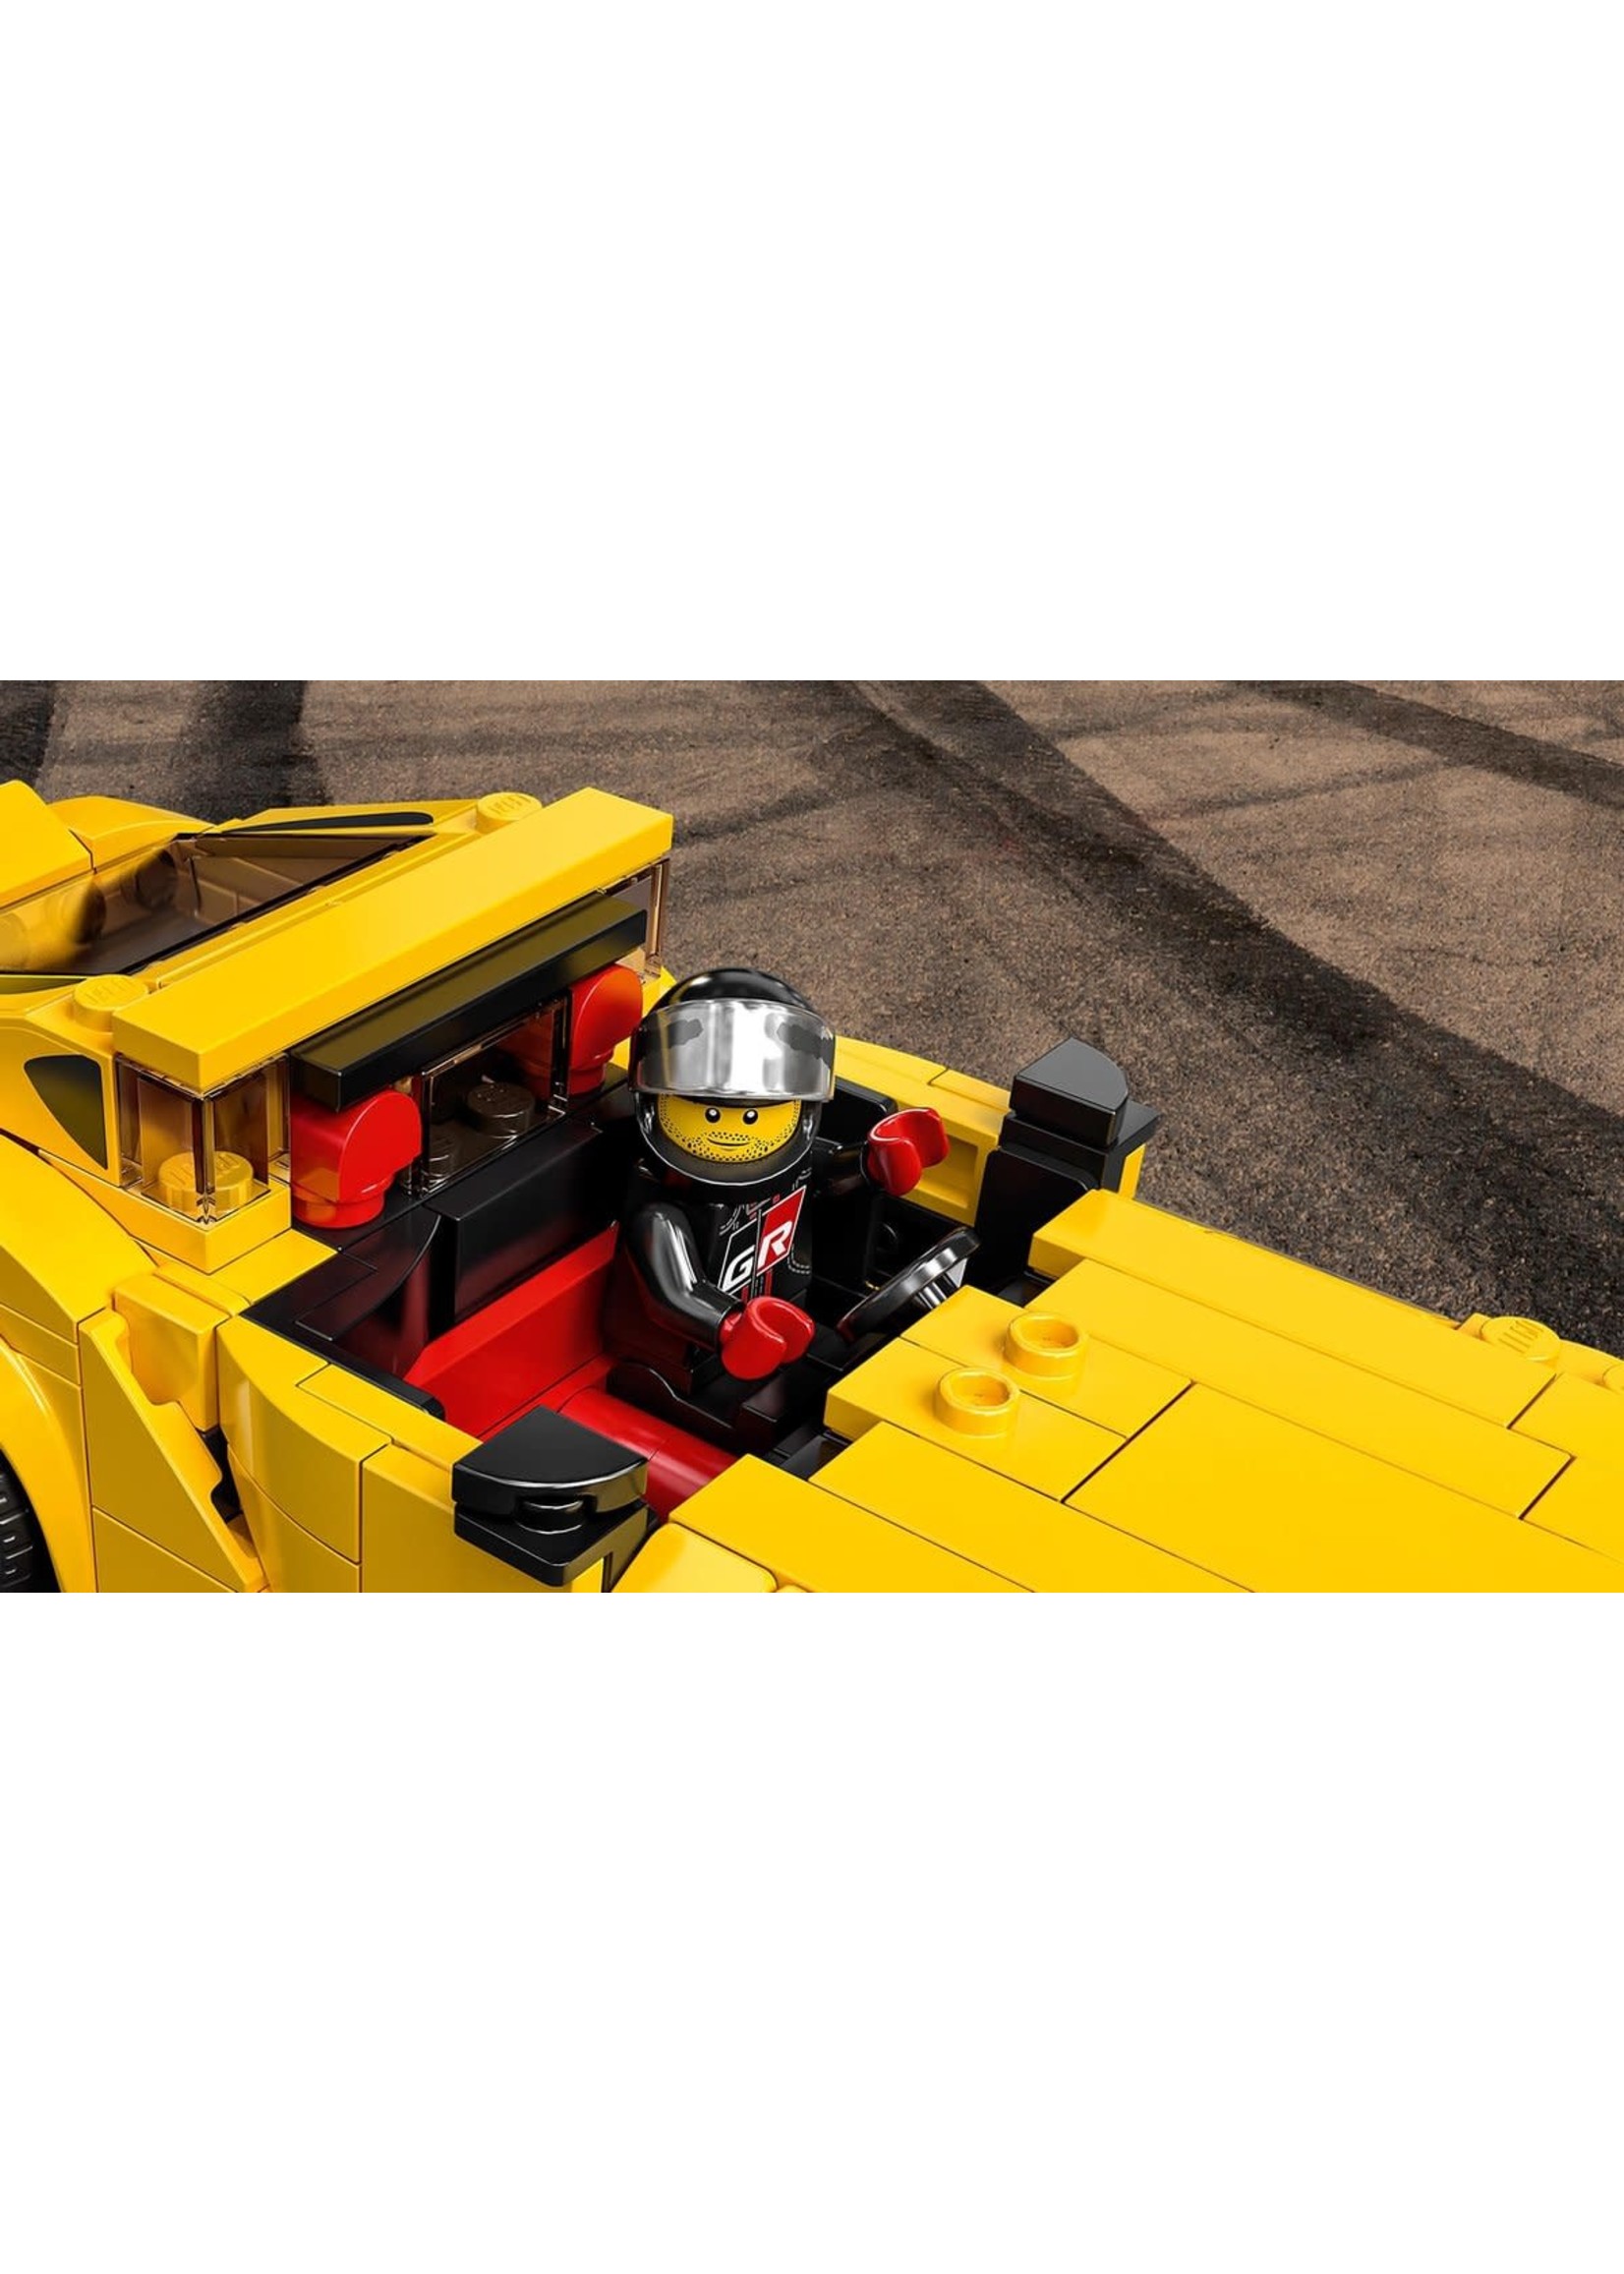 Lego Lego Speed Champions 76901 Toyota